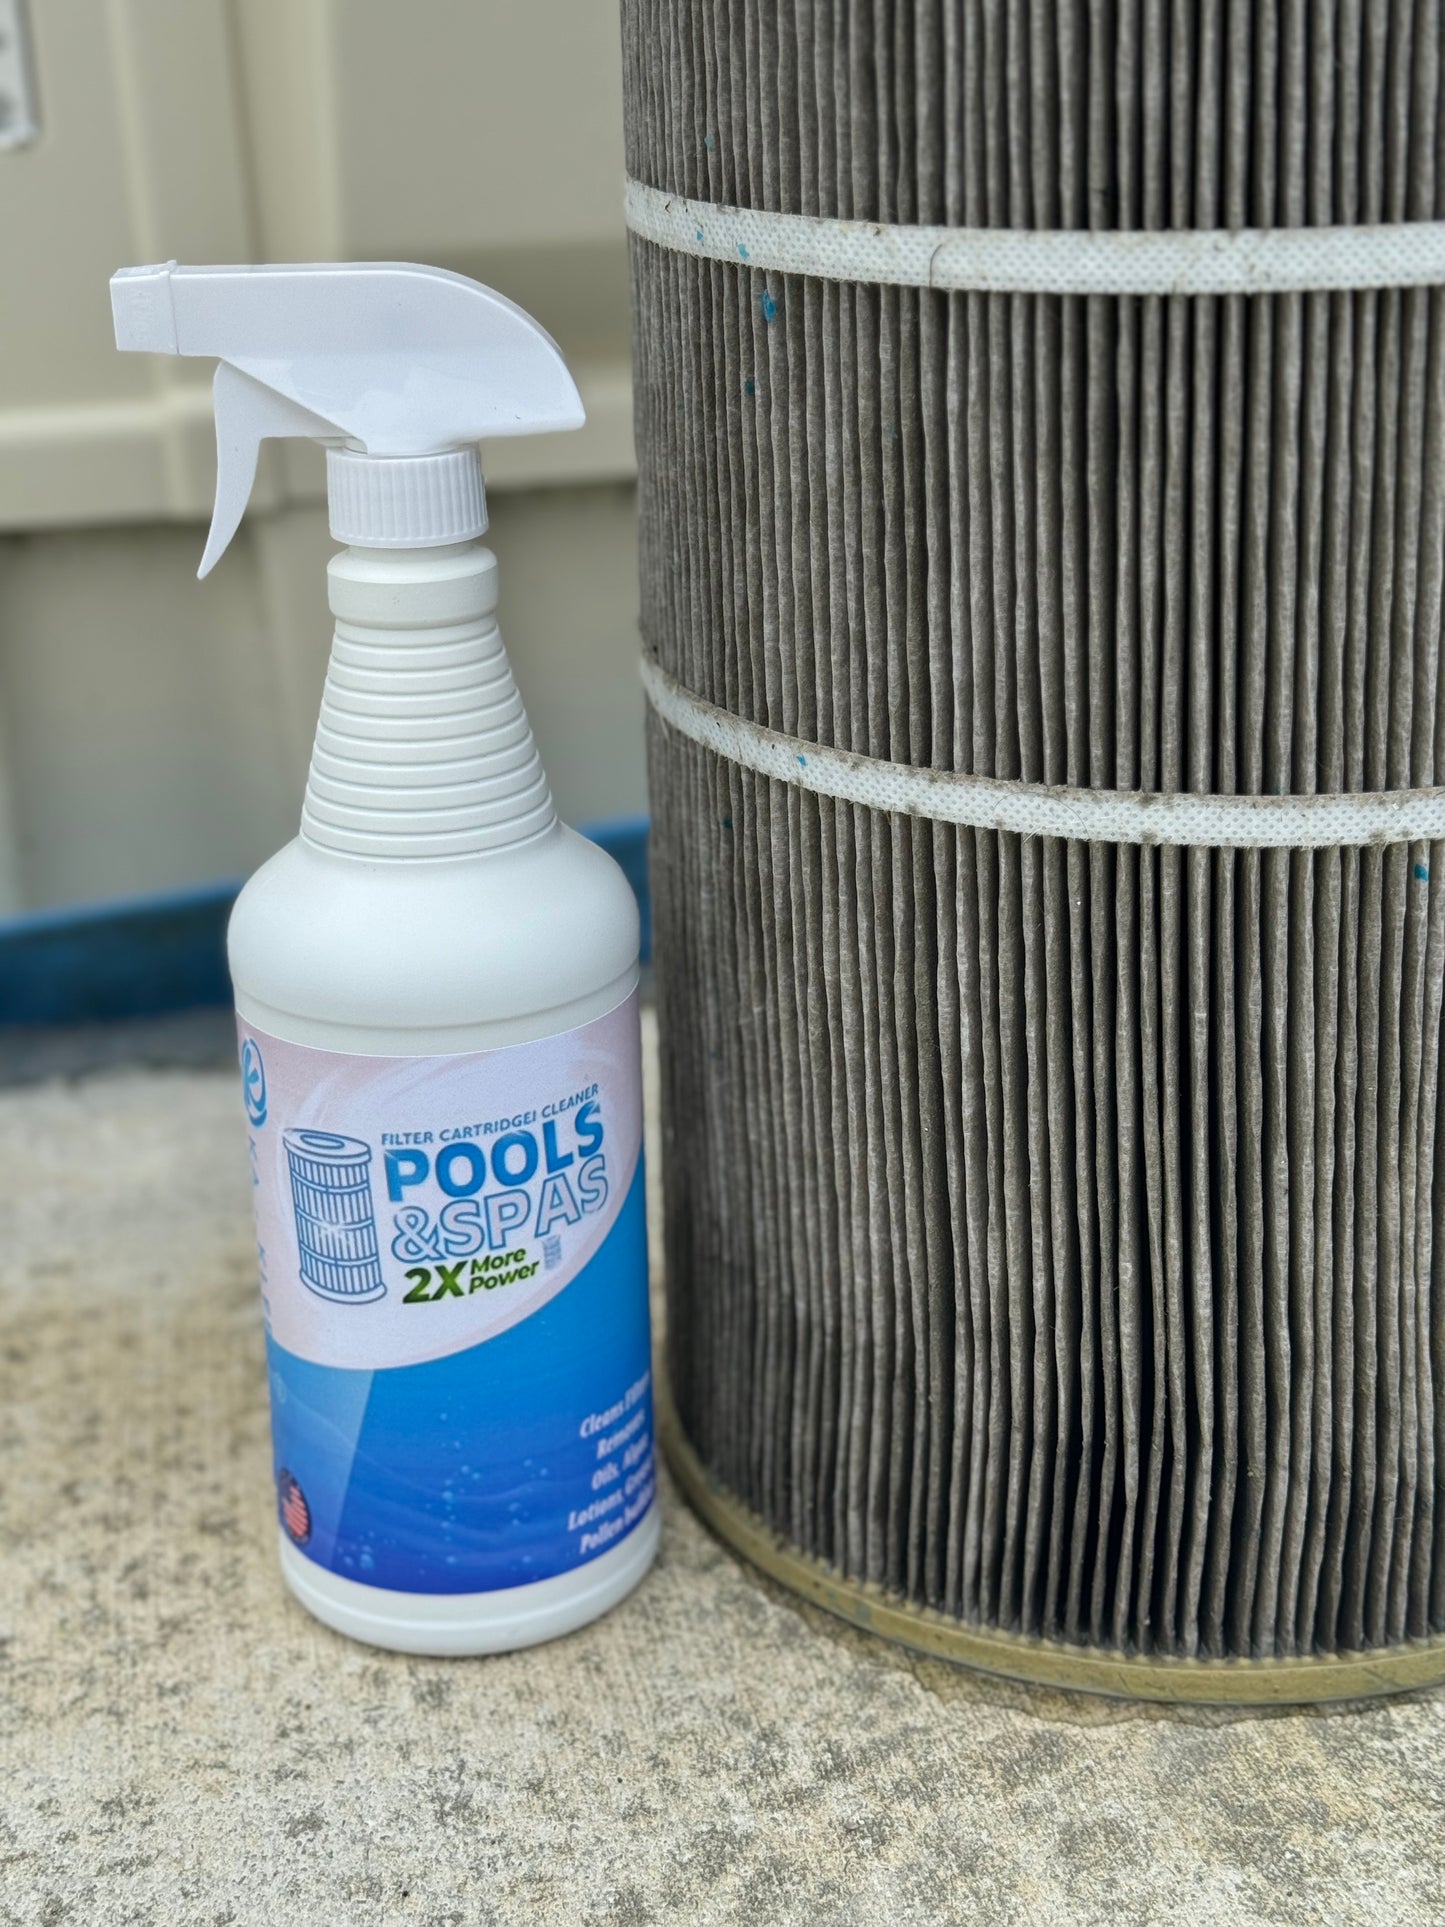 32 oz Pool & Spa Filters Cleaner